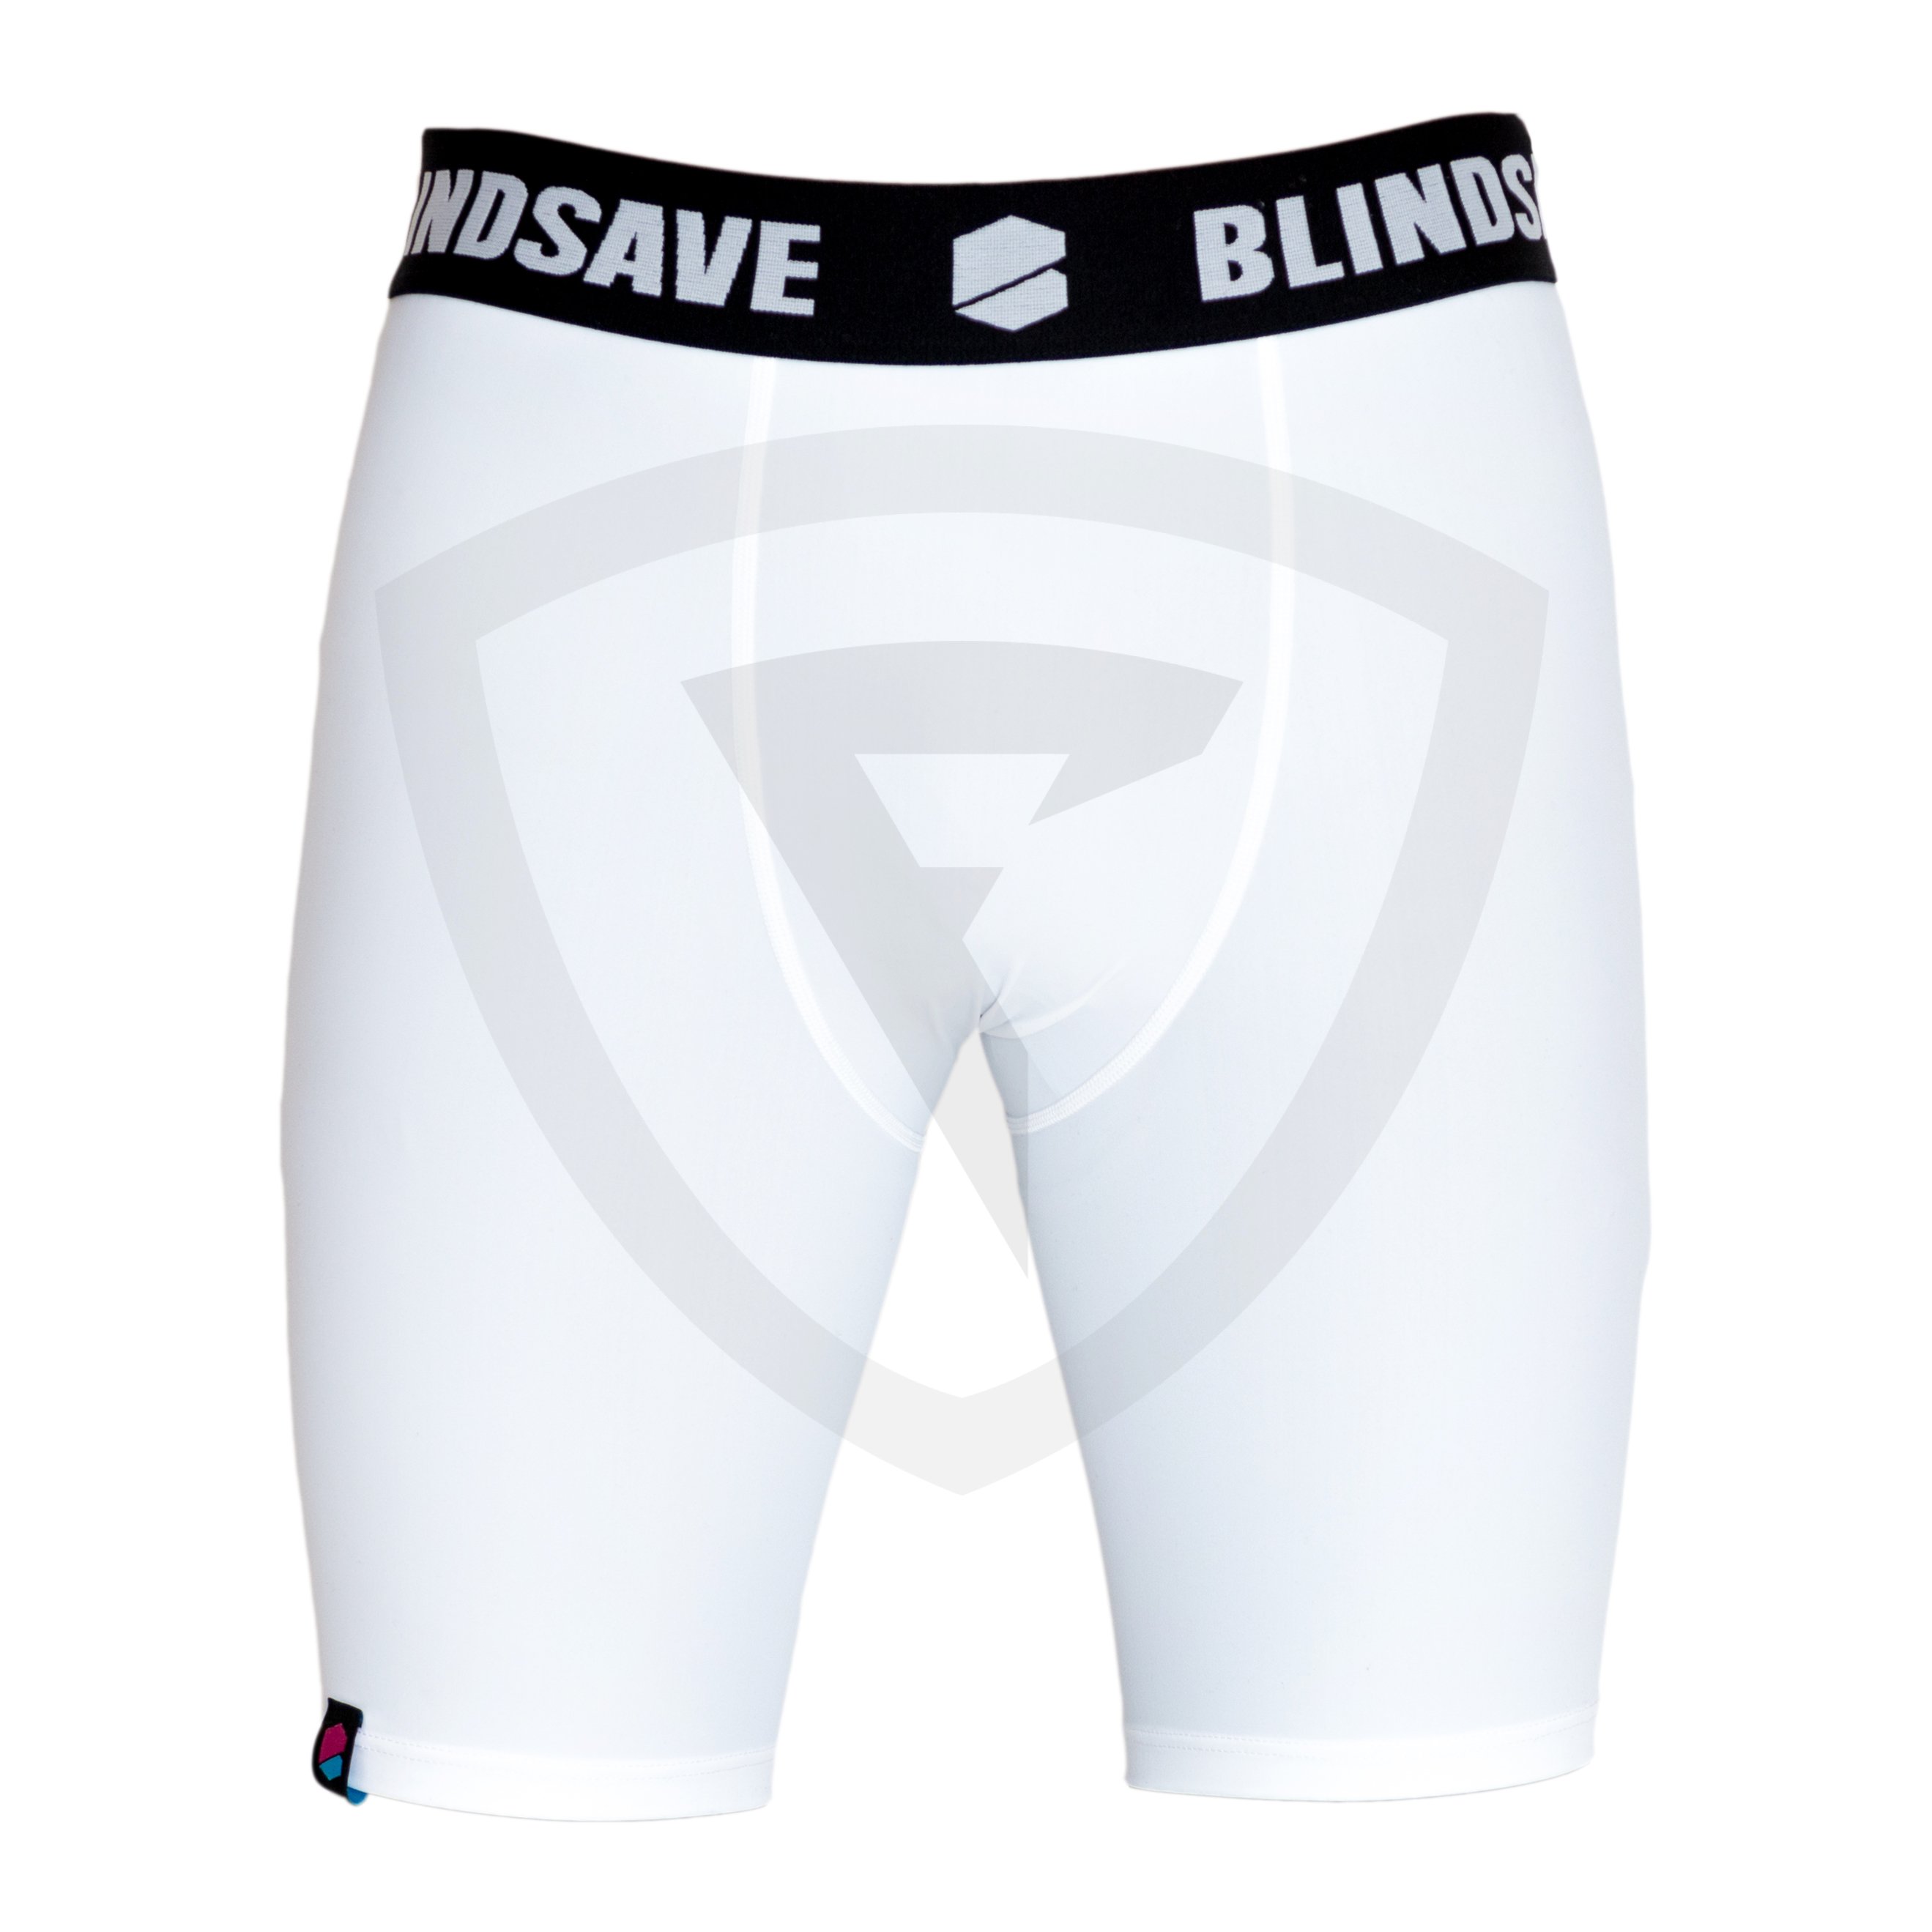 Blindsave Compression Shorts S bílá